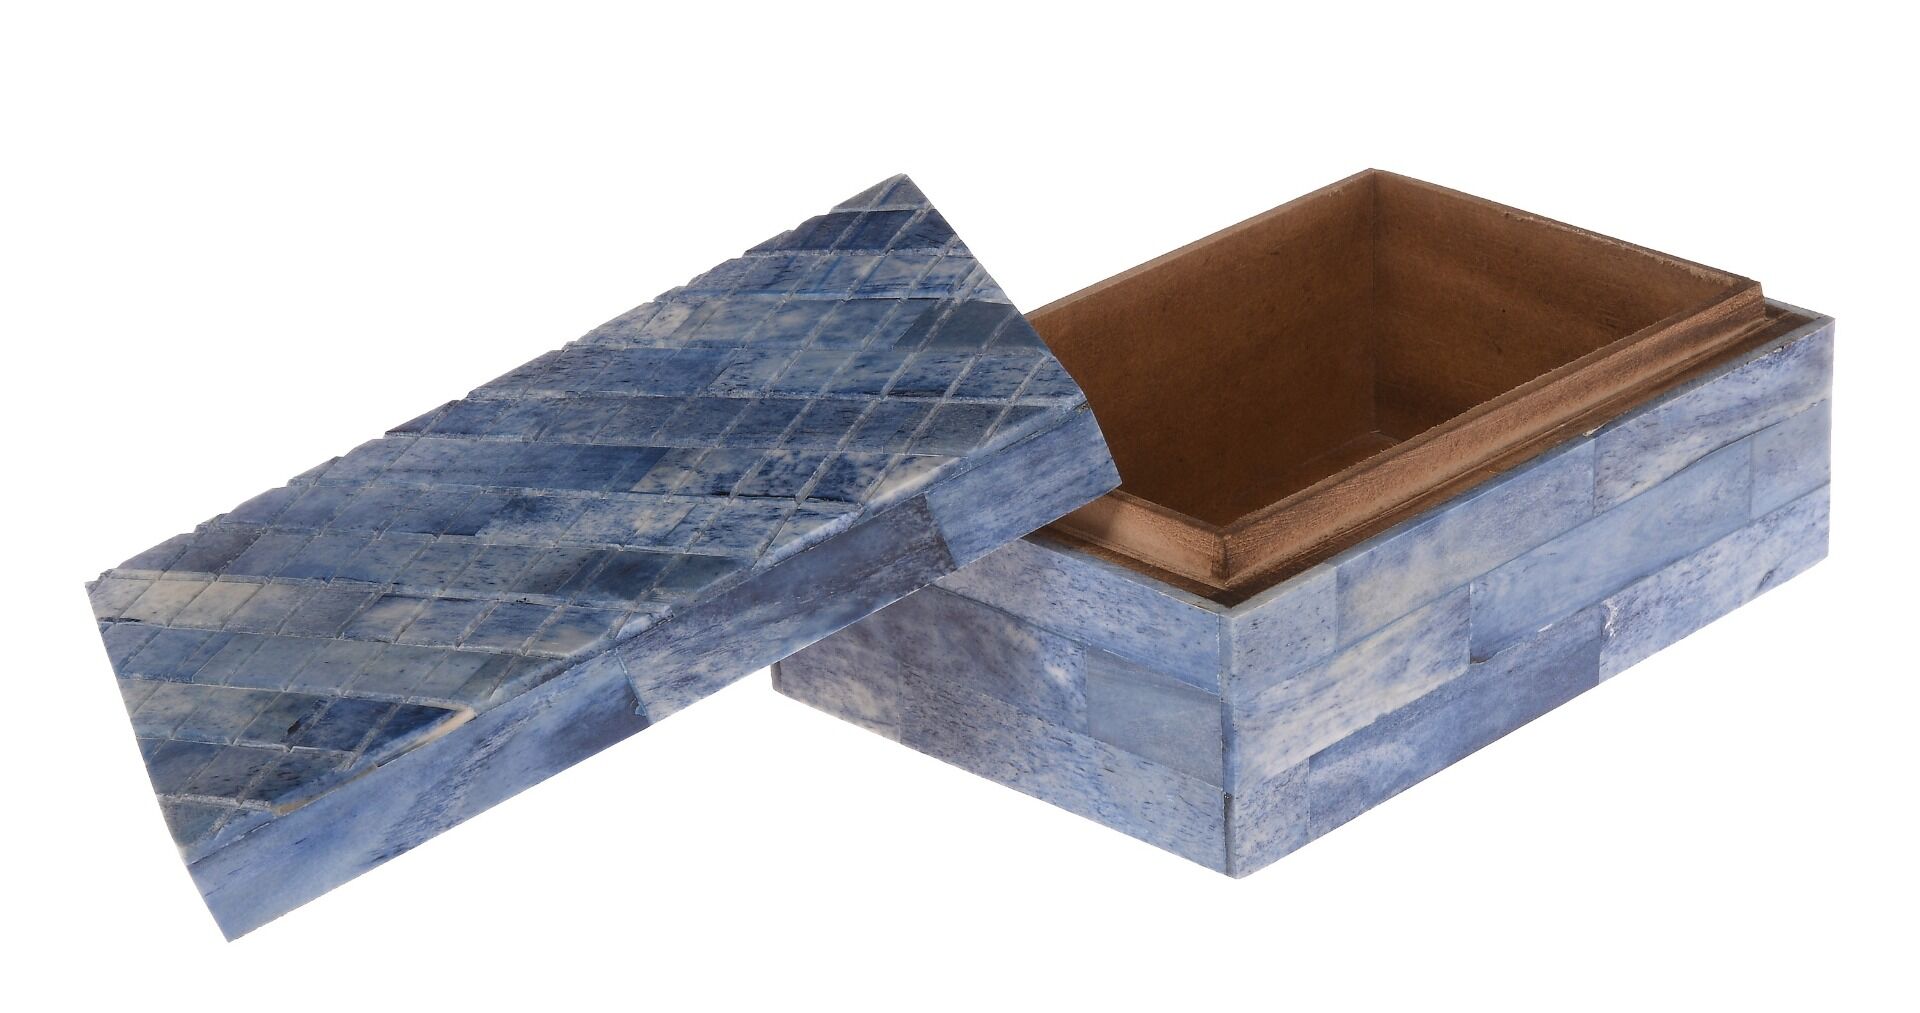 Pudełko Mosaic Blue 10x15x6 cm